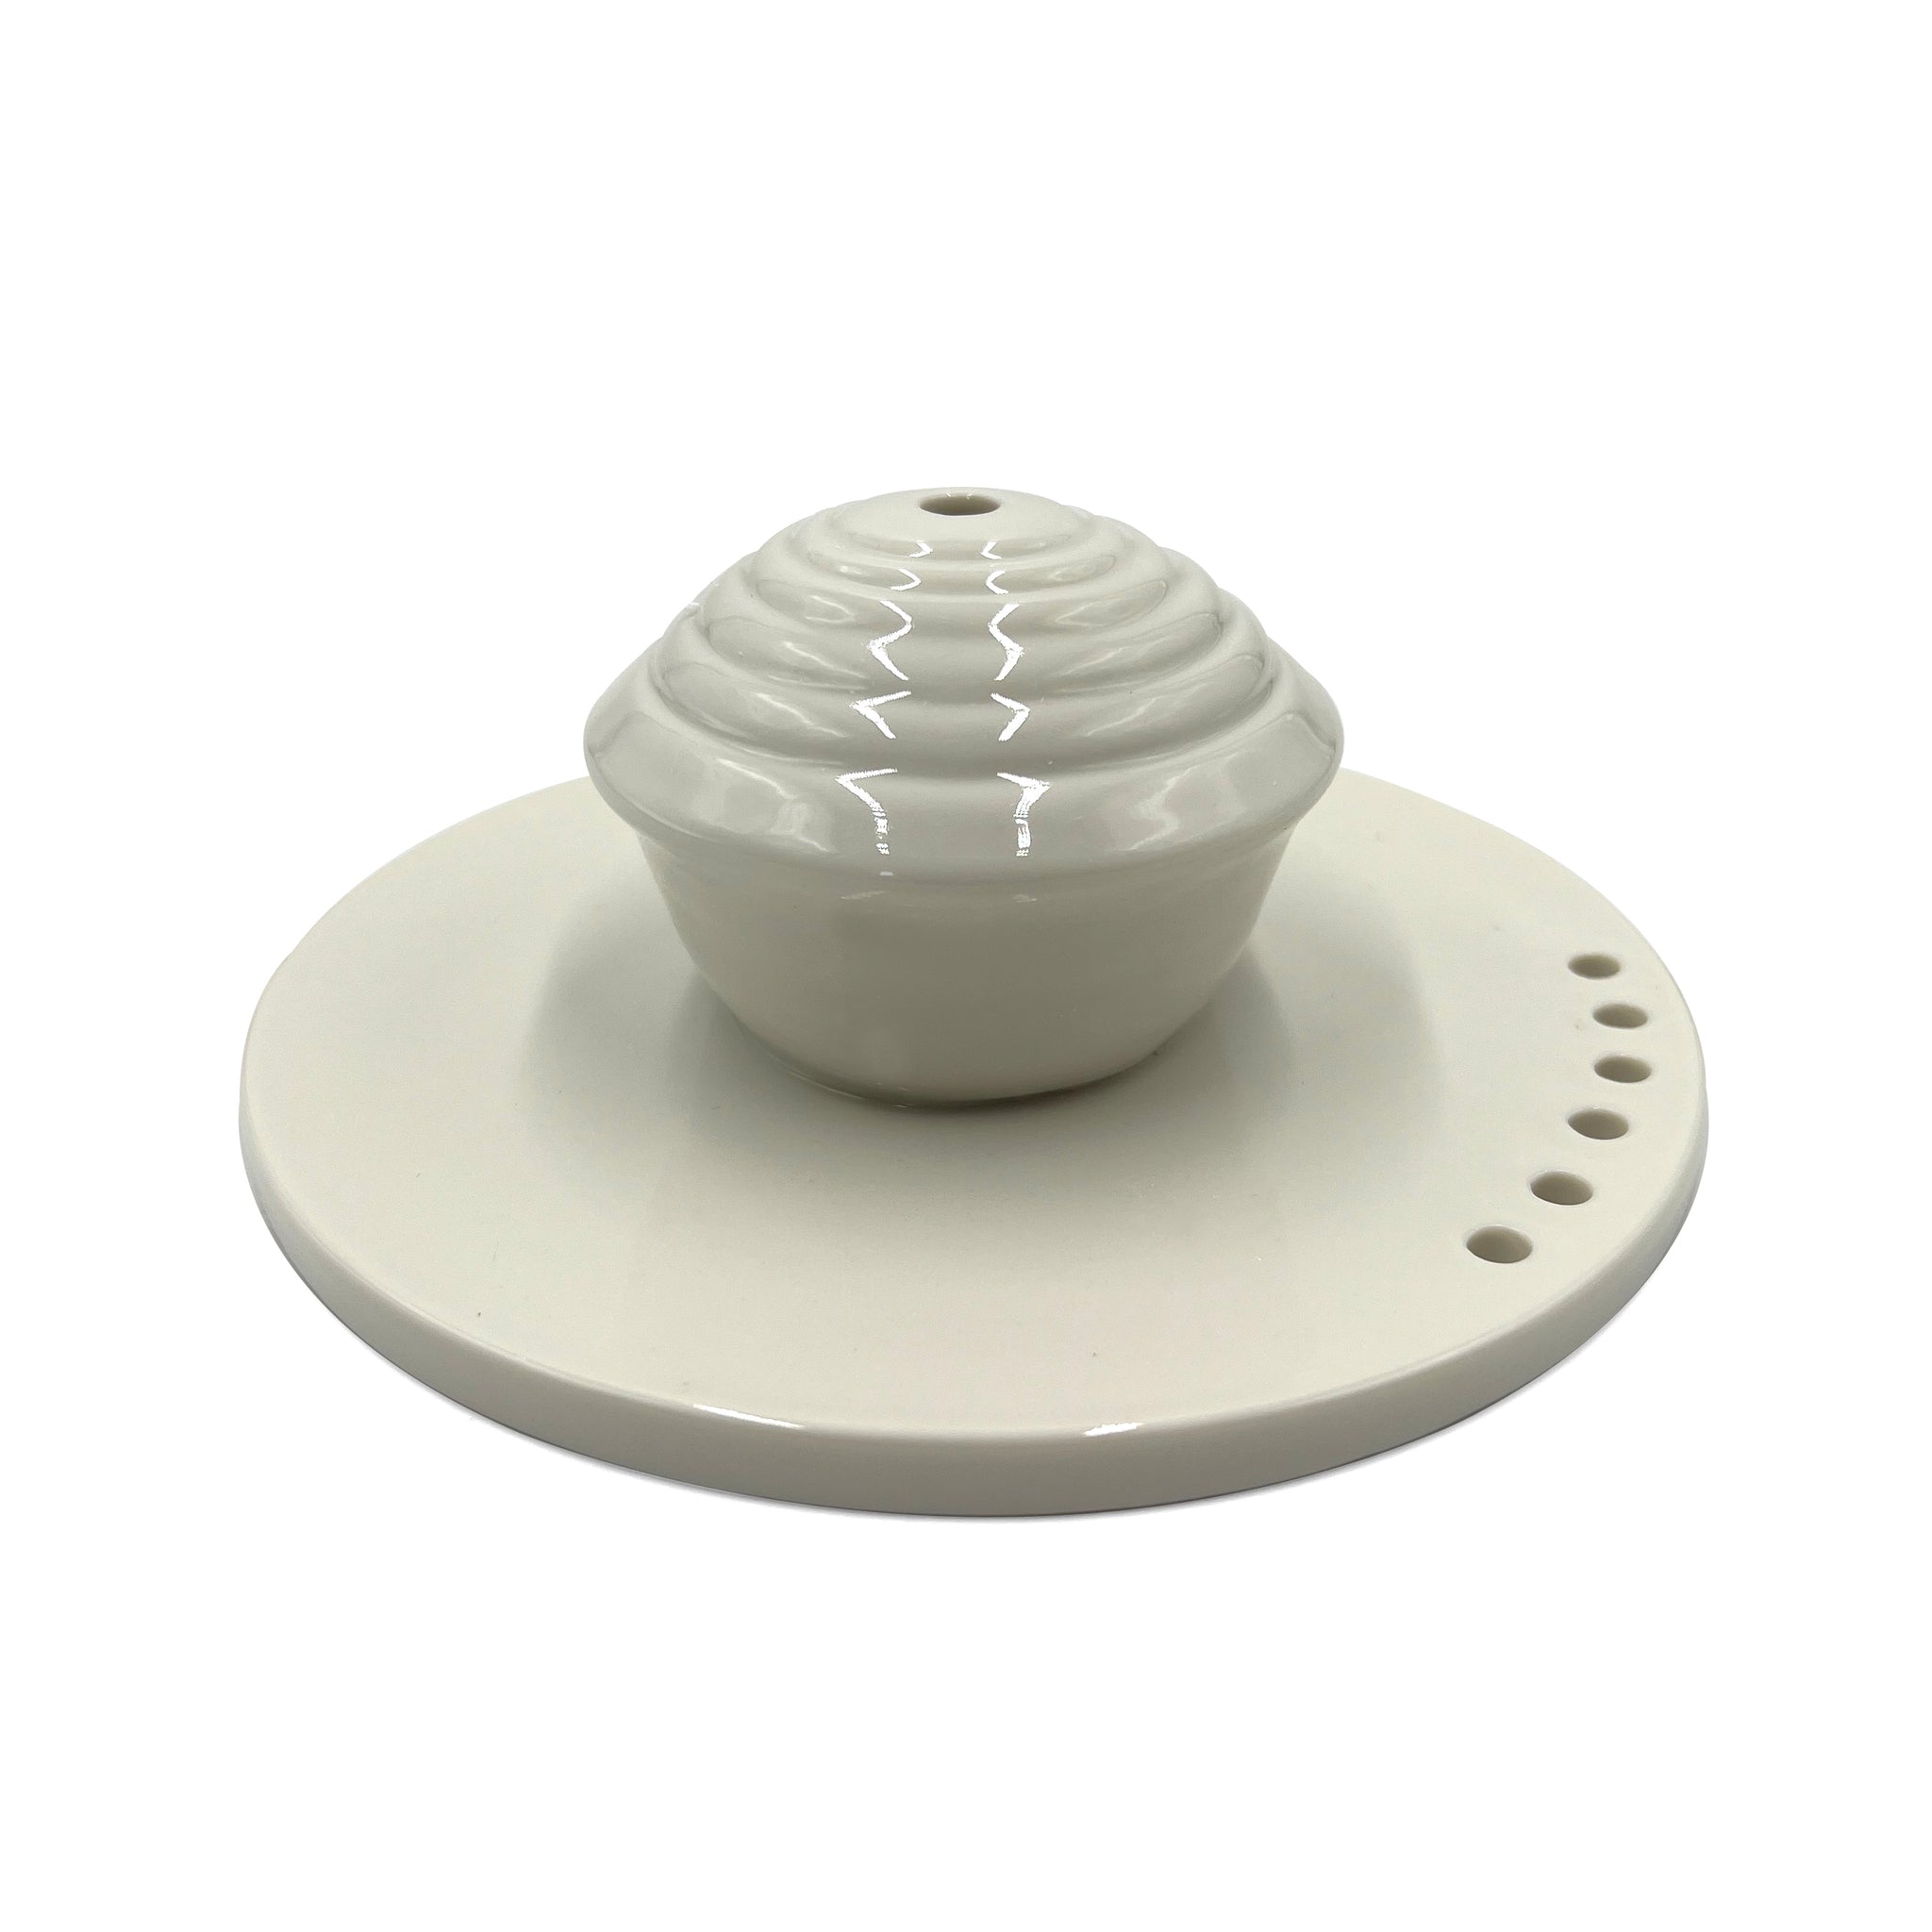 Cupcake Ceramic Top for Ceramic Pet Fountains